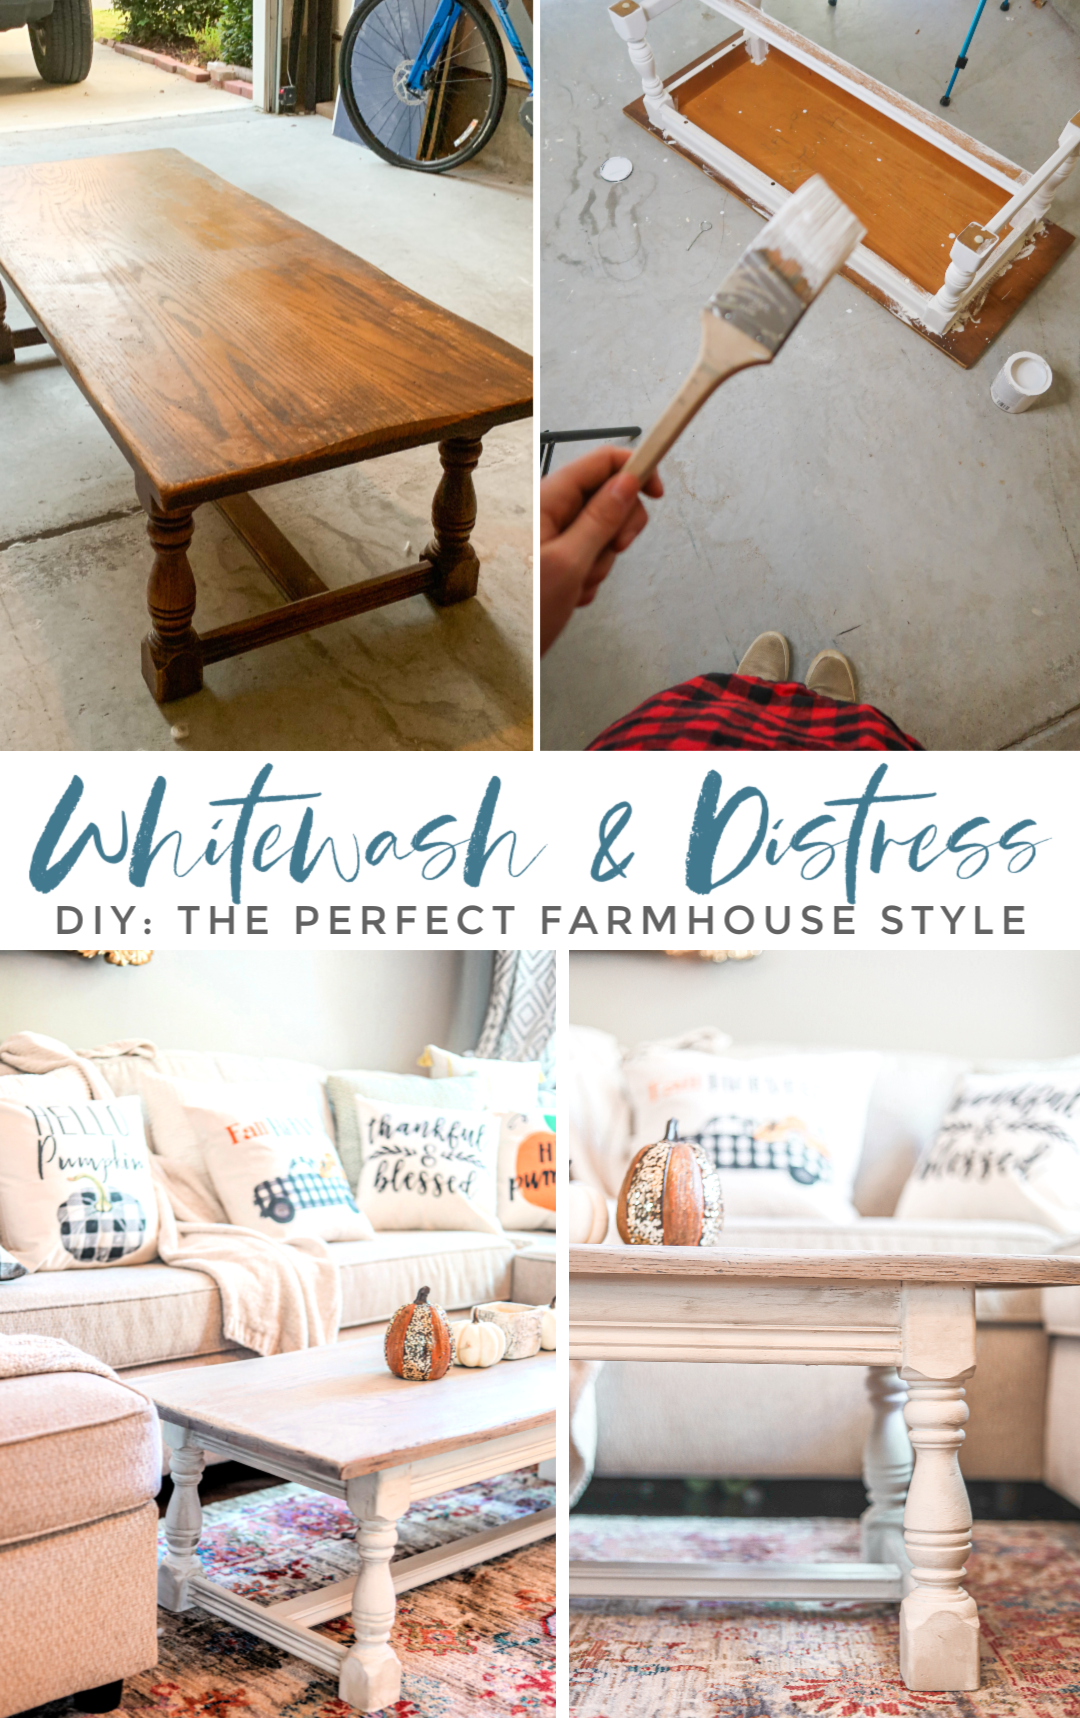 How to Whitewash & Distress Furniture: DIY Farmhouse Coffee Table